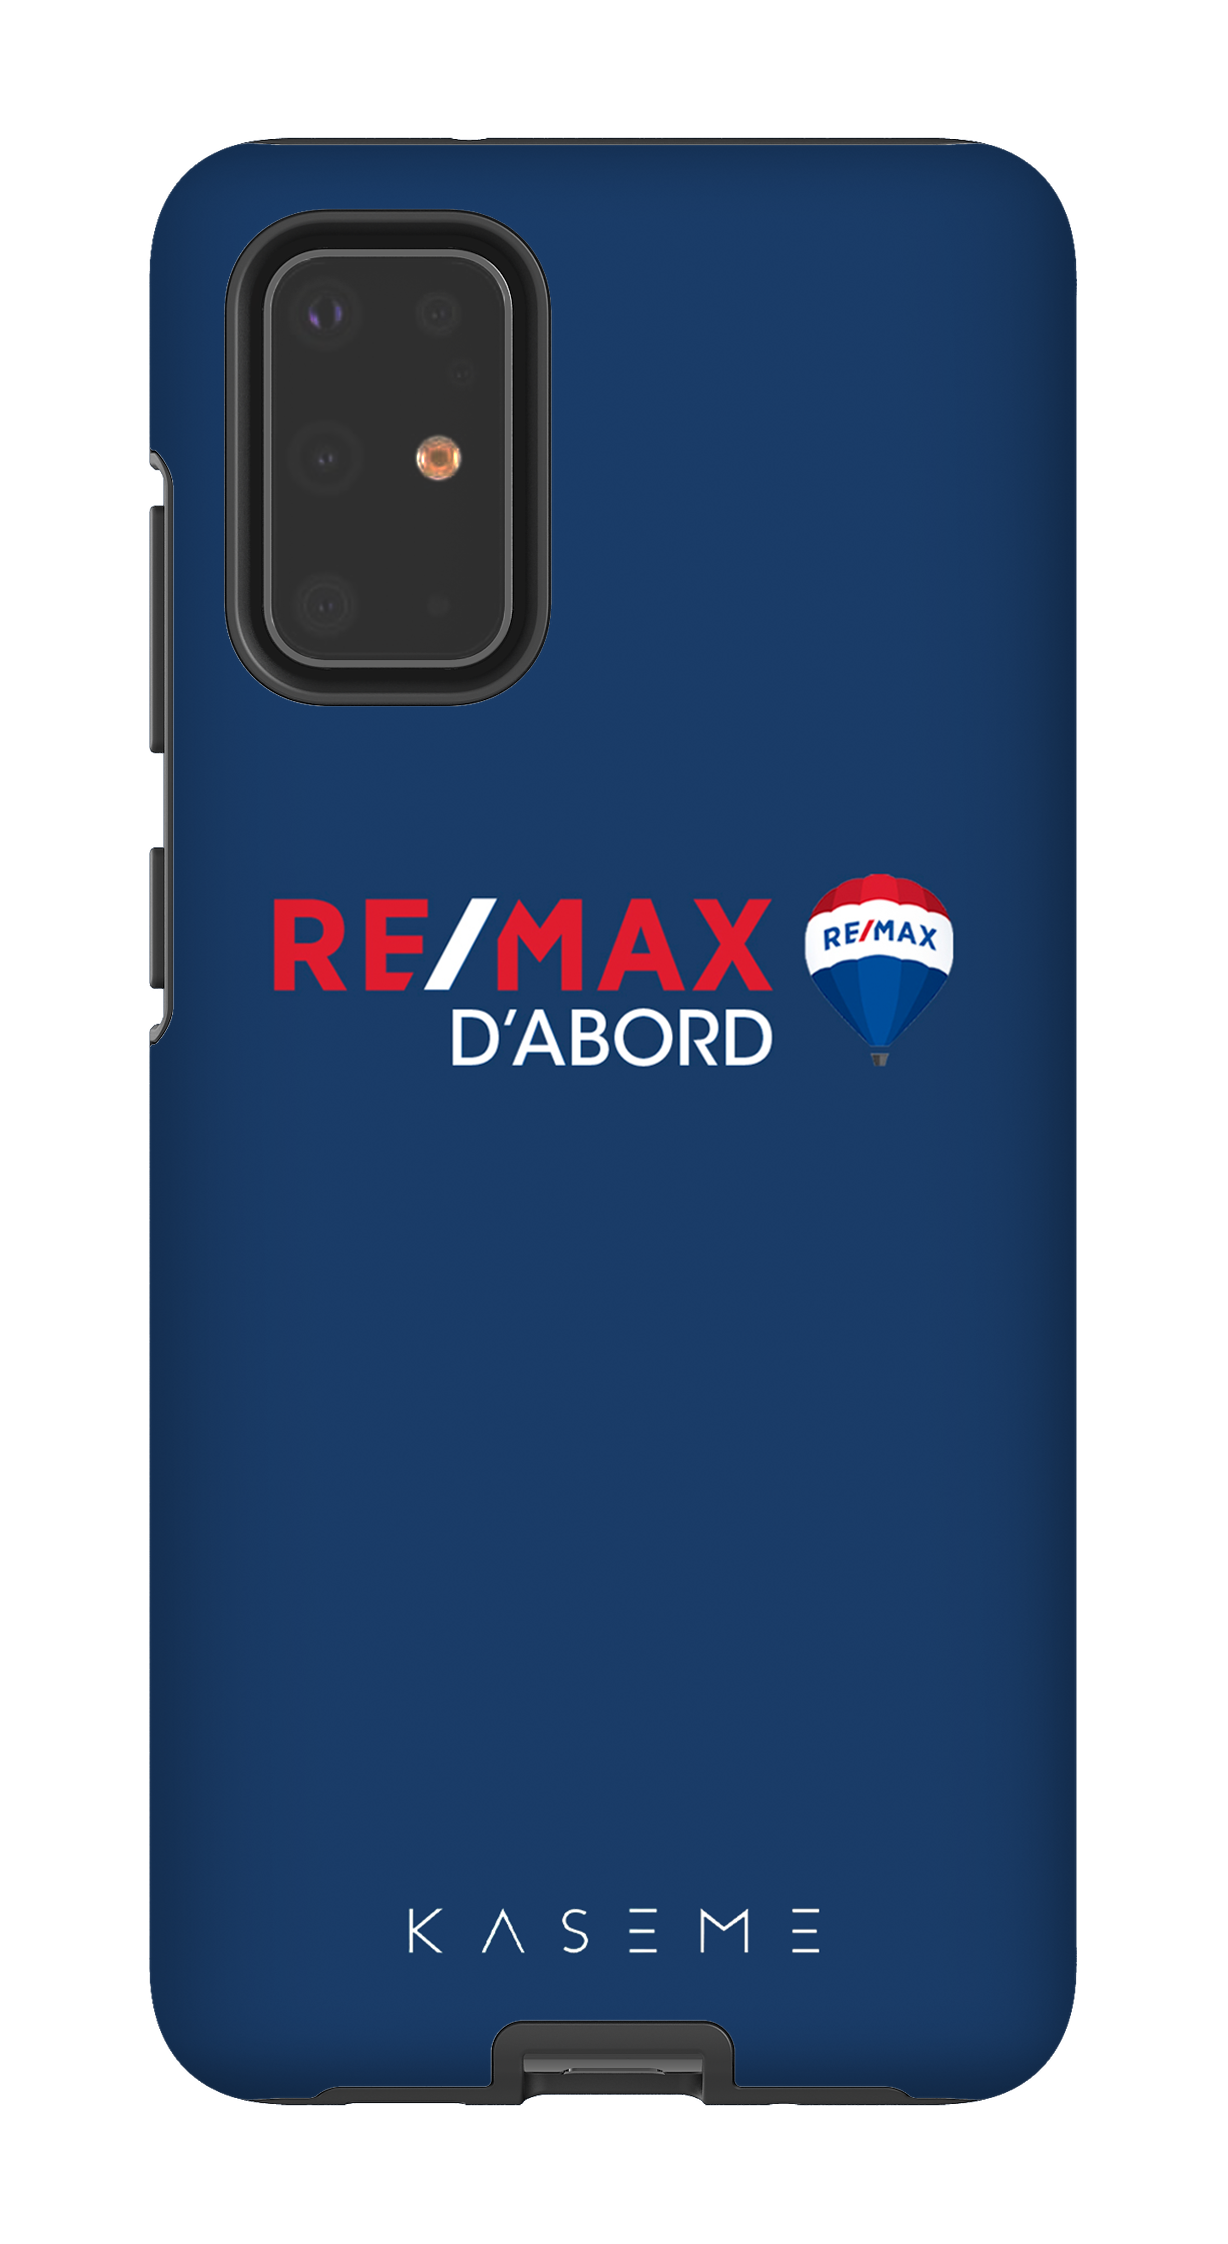 Remax D'abord Bleu - Galaxy S20 Plus